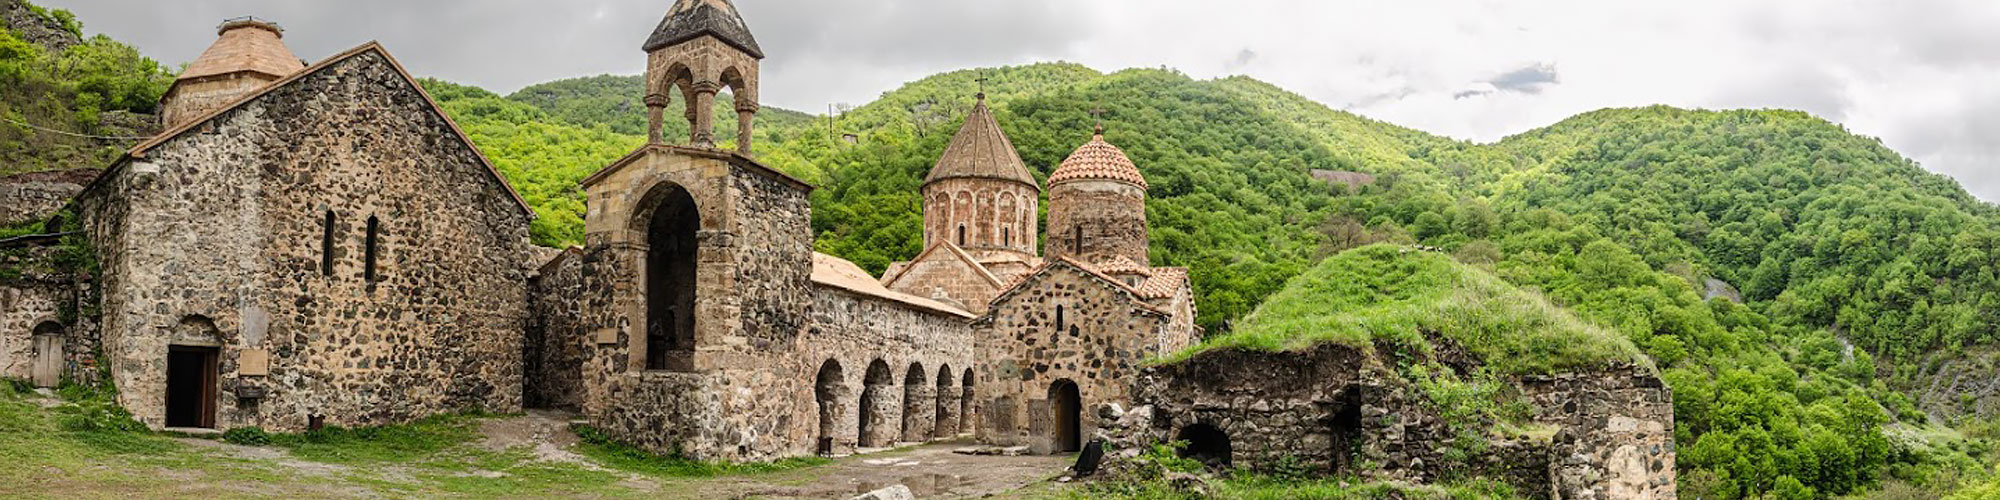 About Artsakh - Dadivank Monastery Artsakh (Nagorno Karabakh)